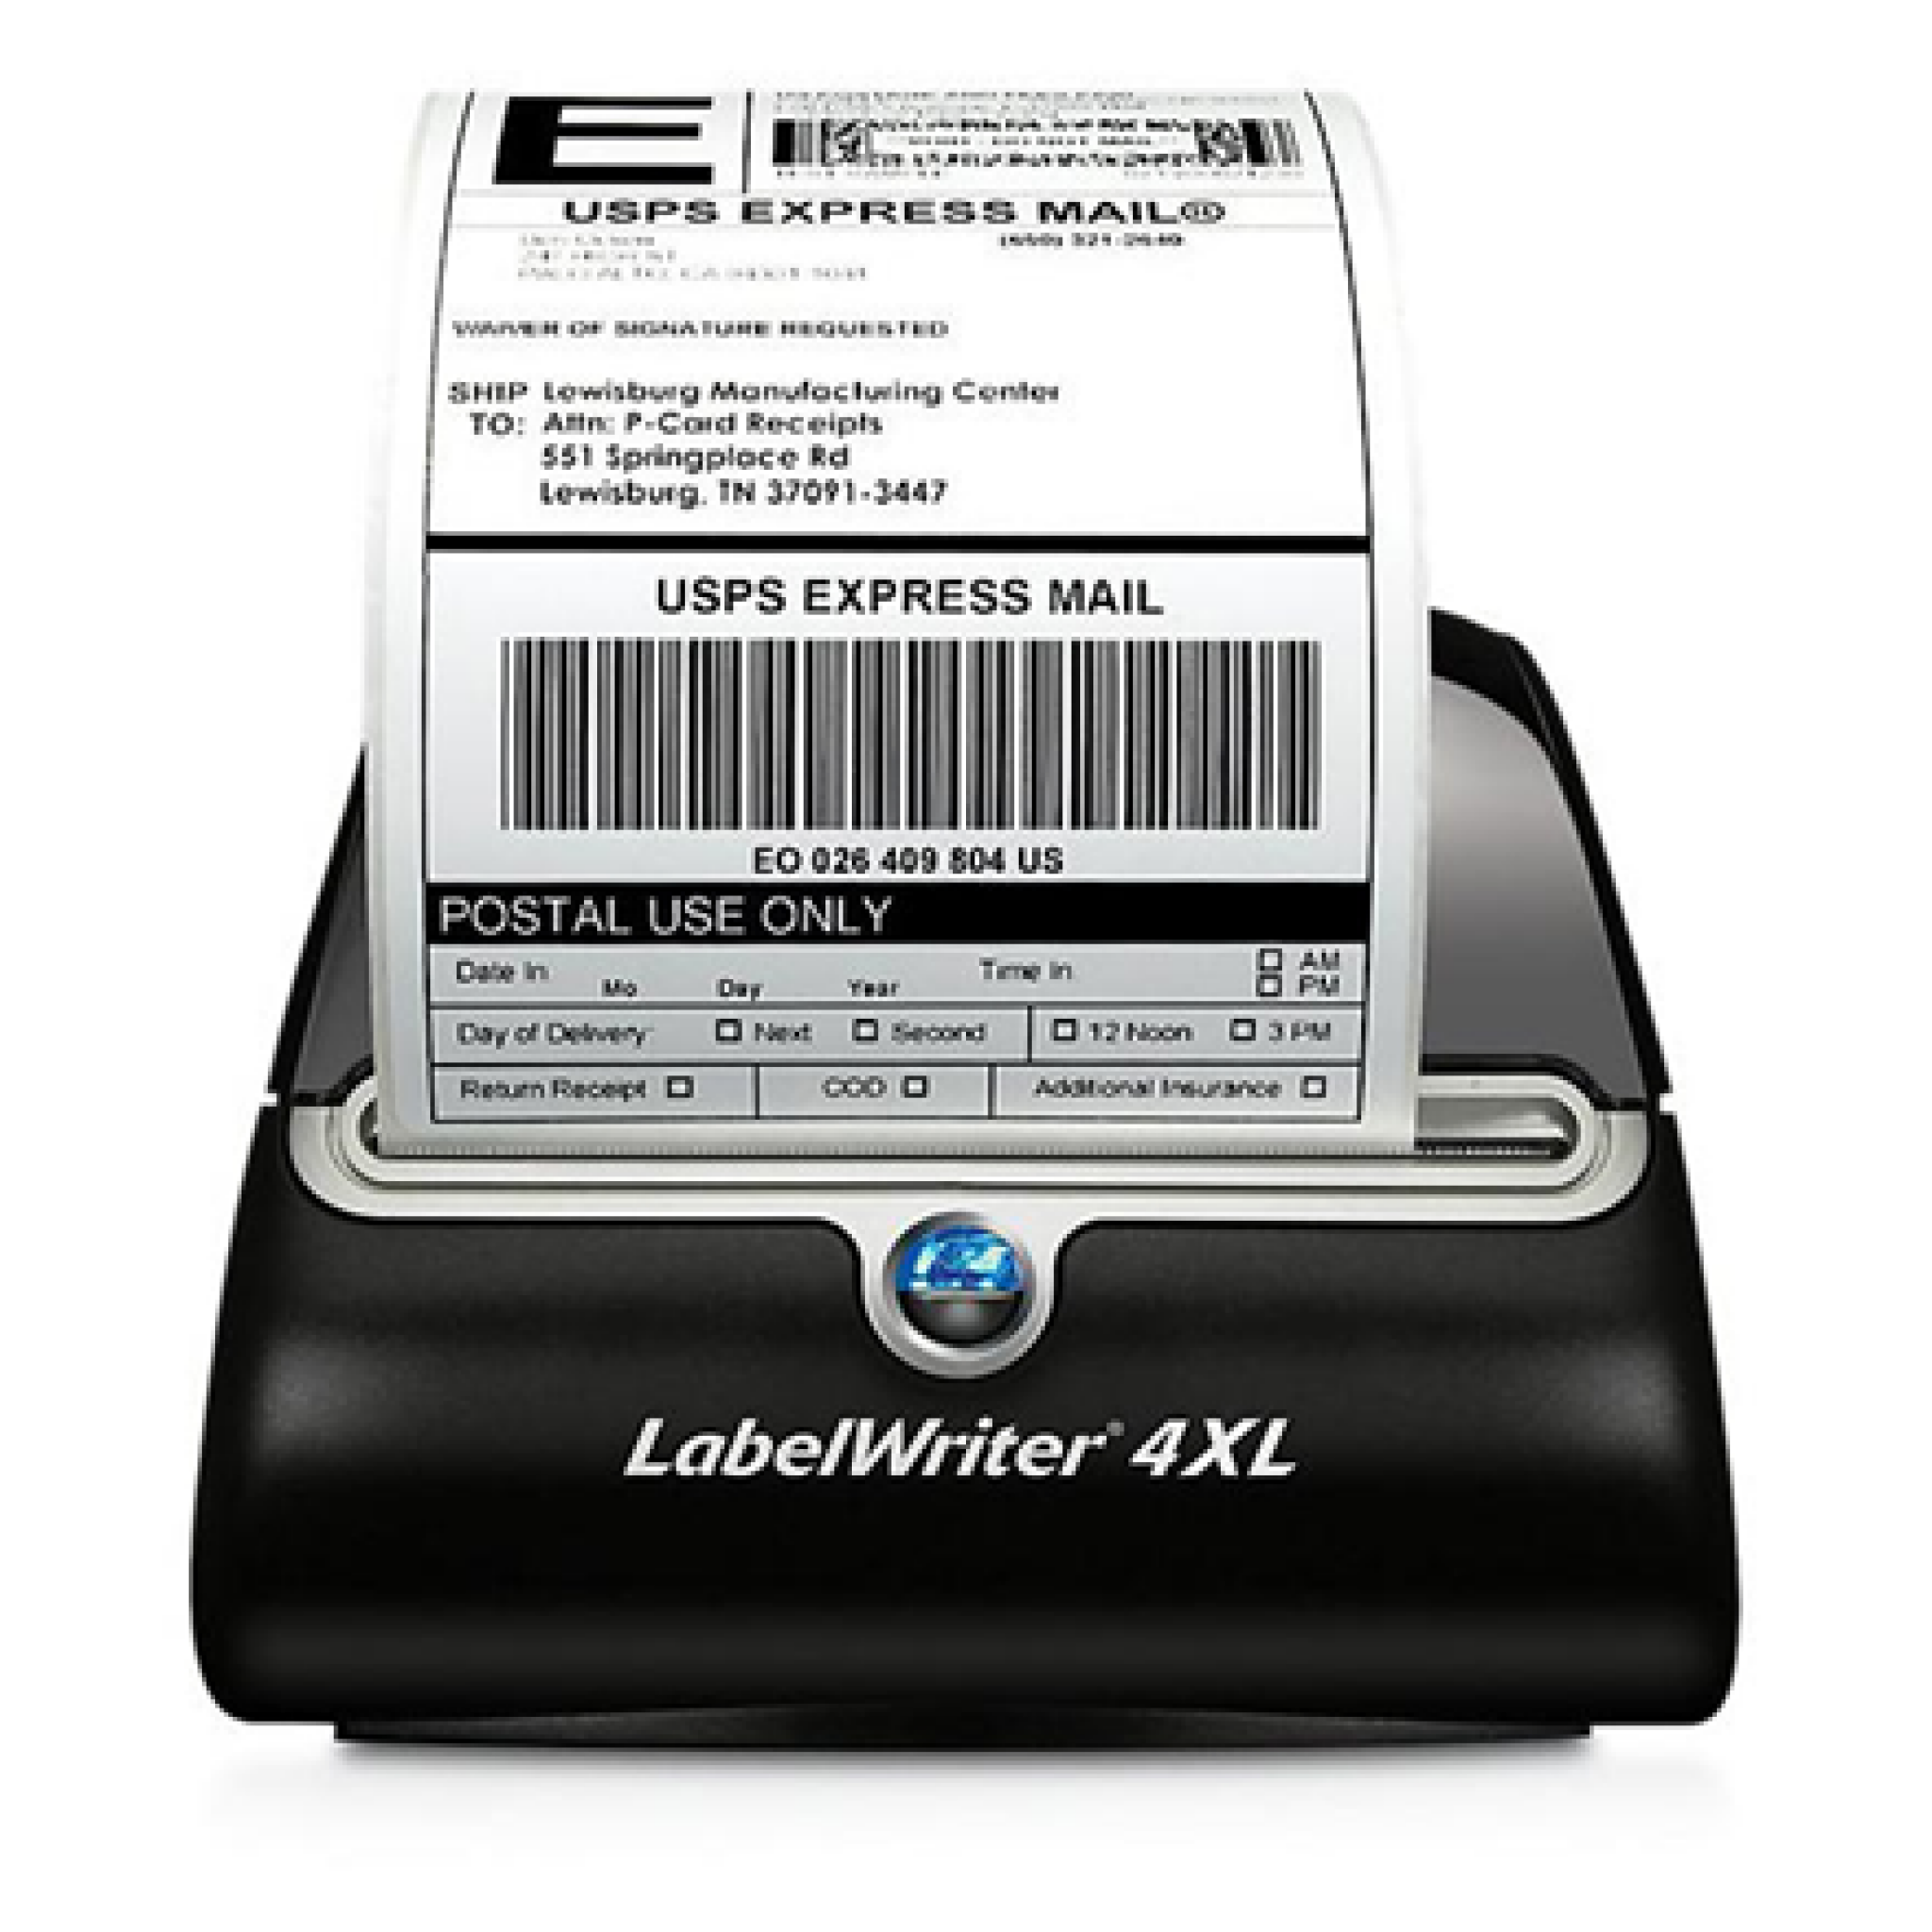 dymo labelwriter 400 software version 7